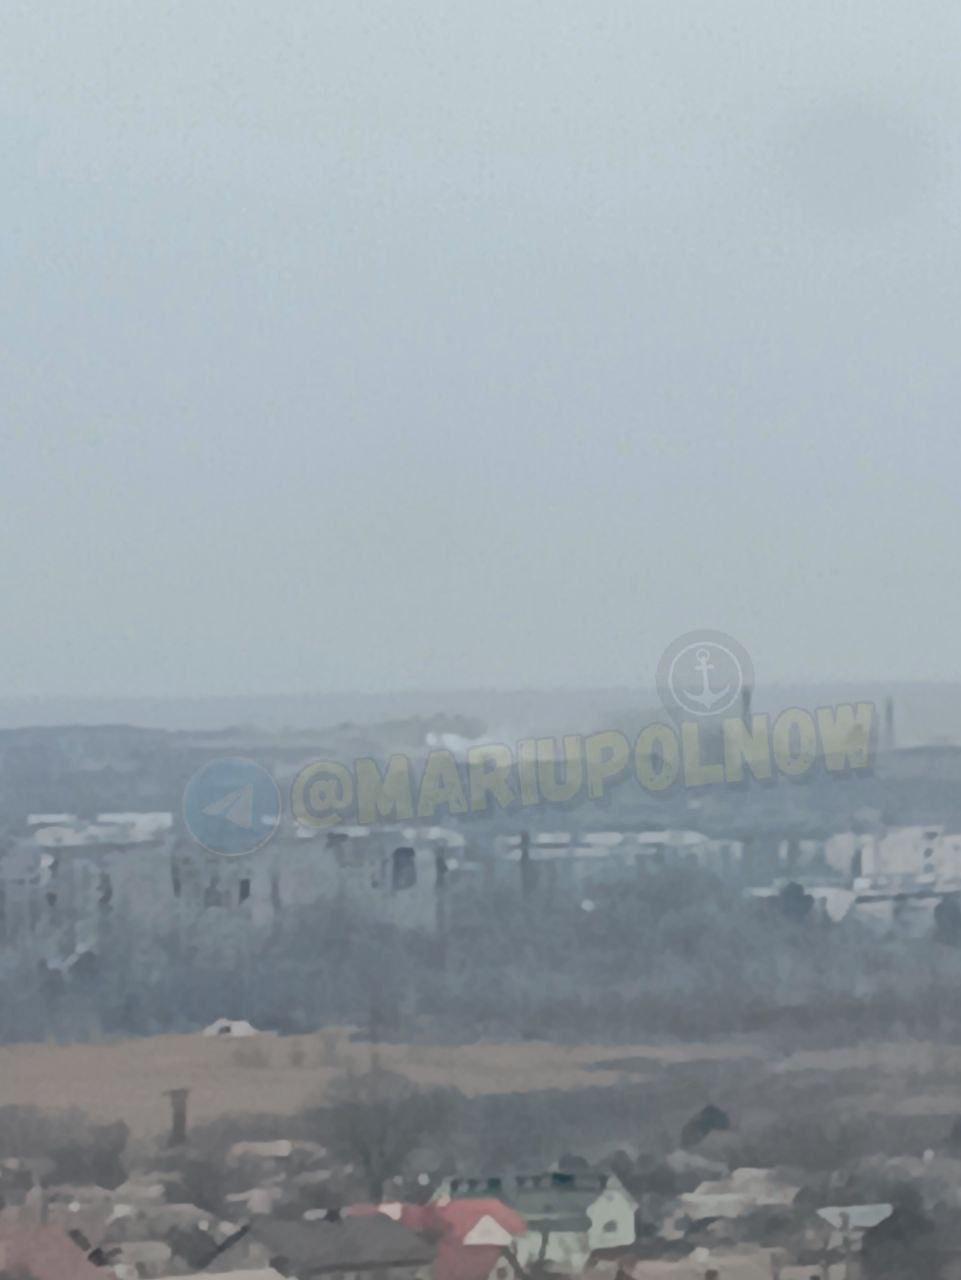 Legitimate: Loud explosions reported in Russian-occupied Mariupol.